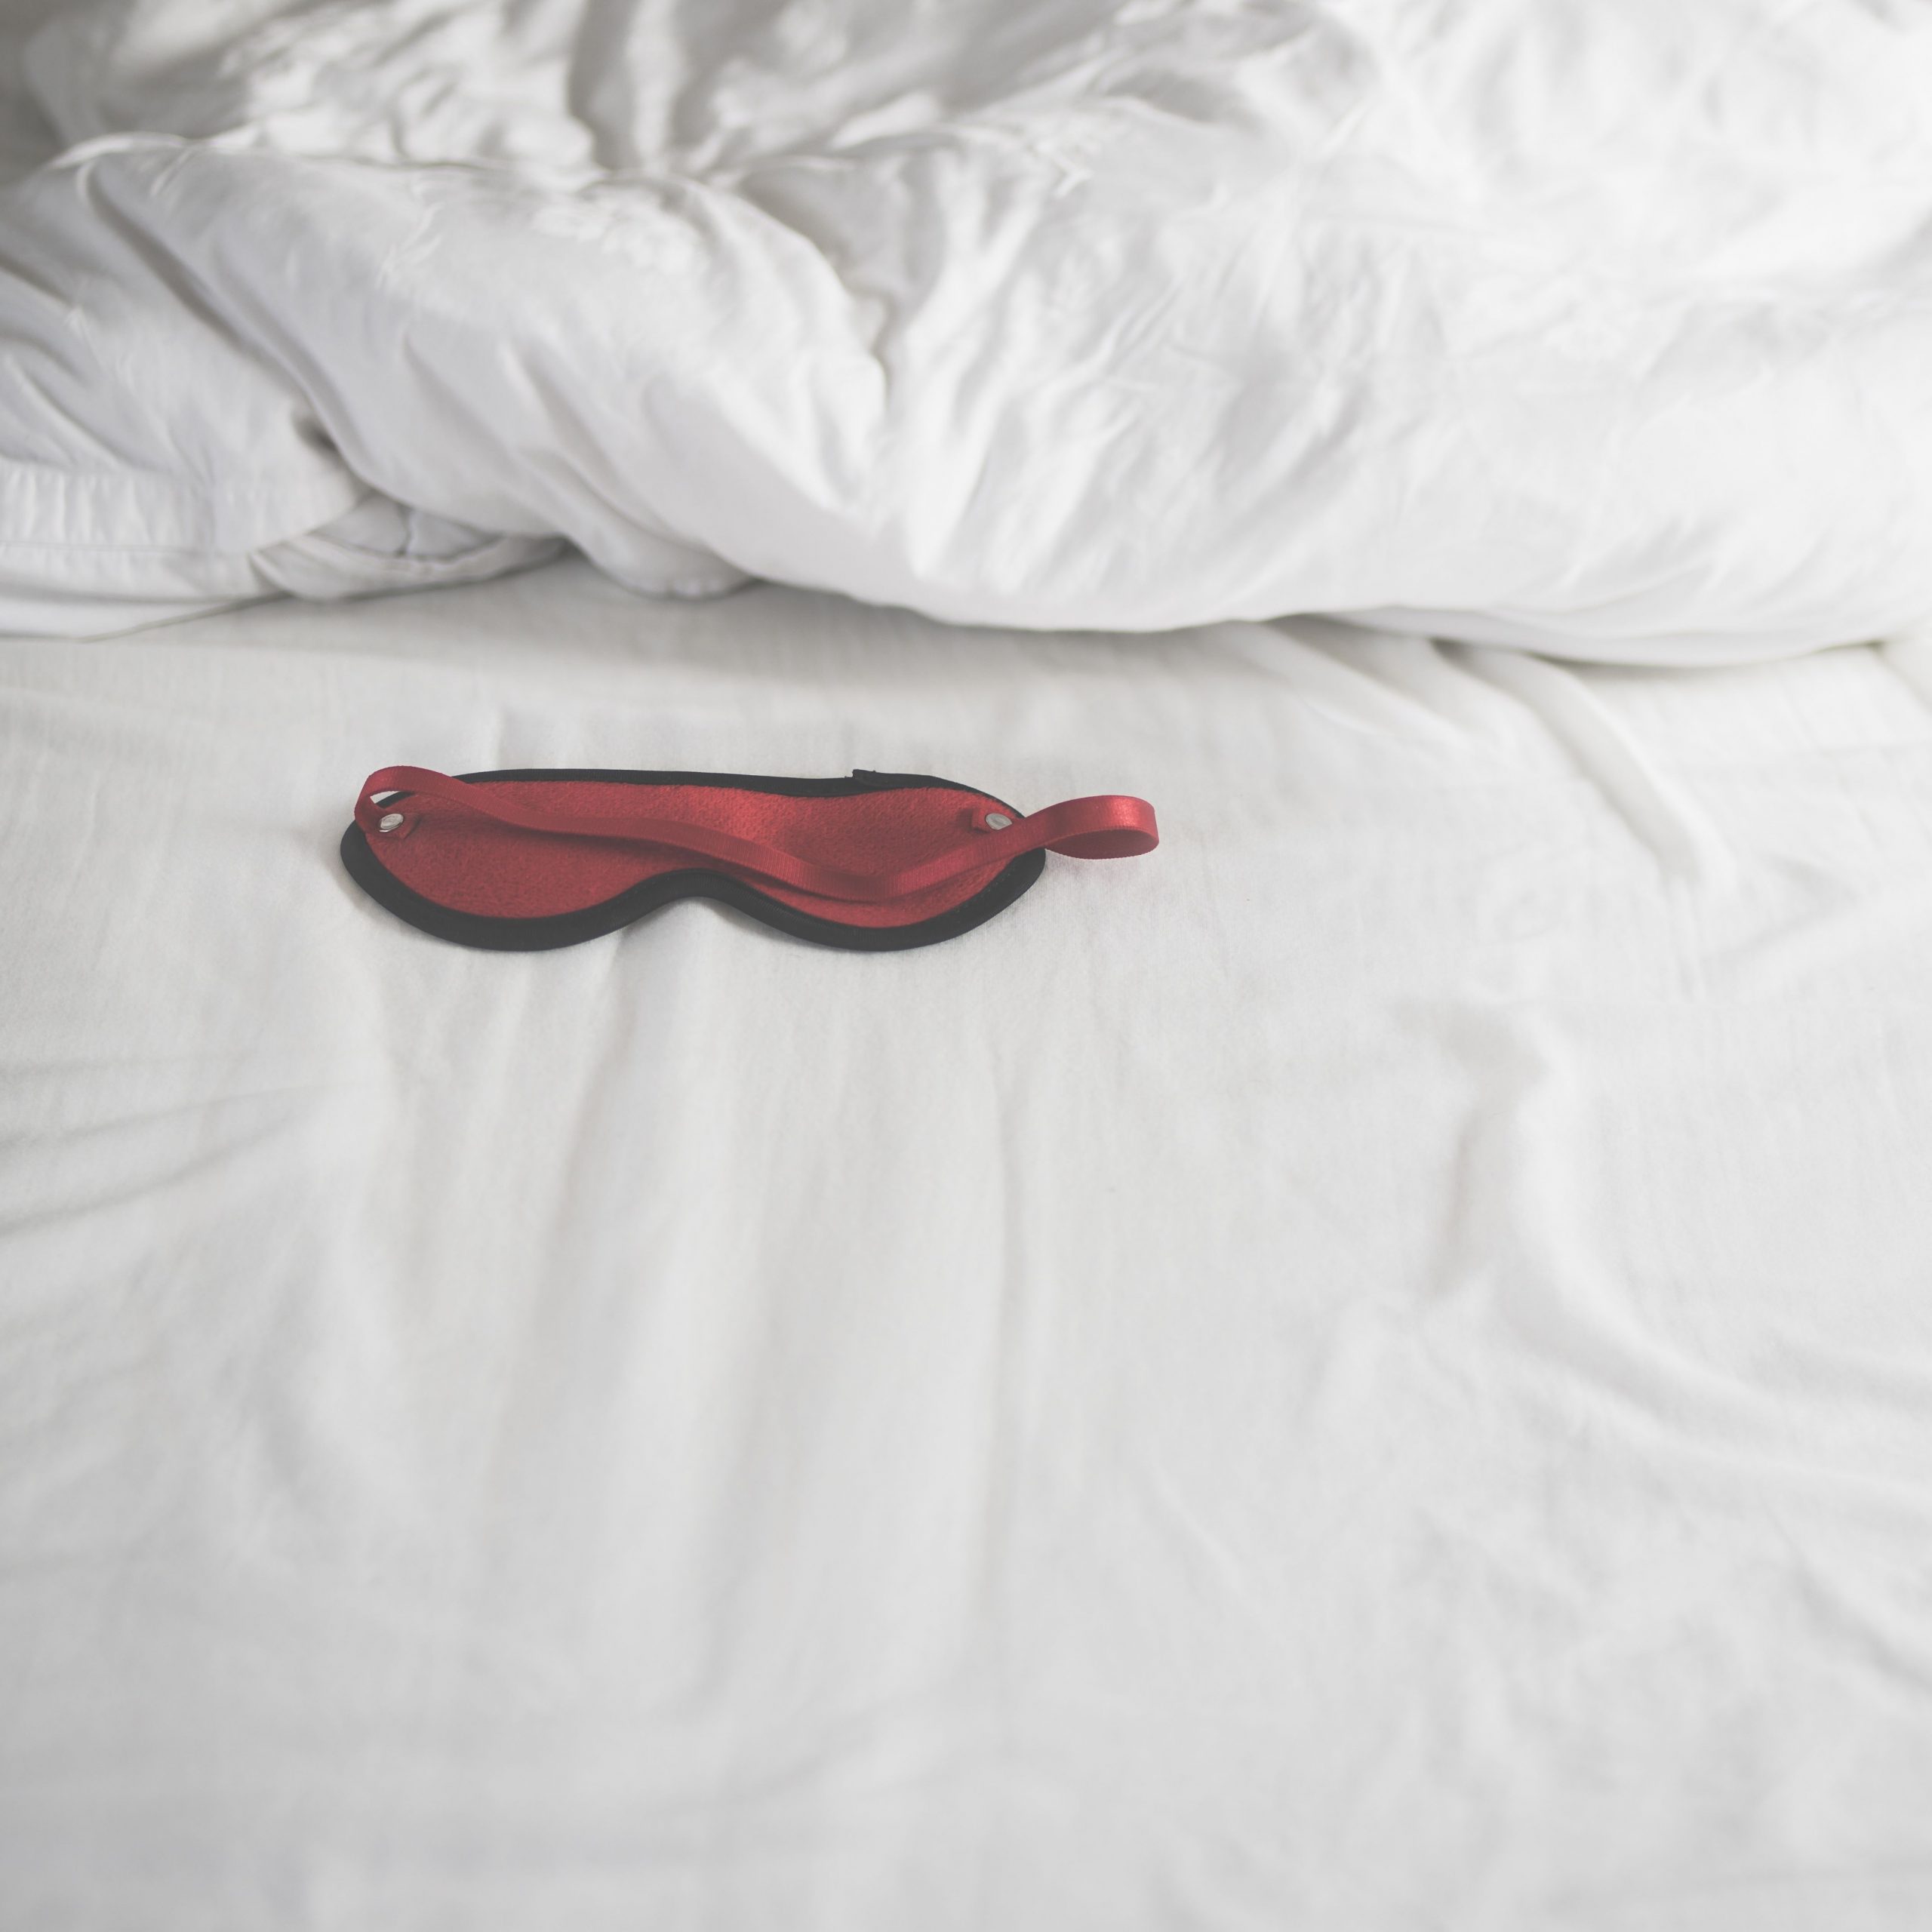 eye mask in rumpled bed